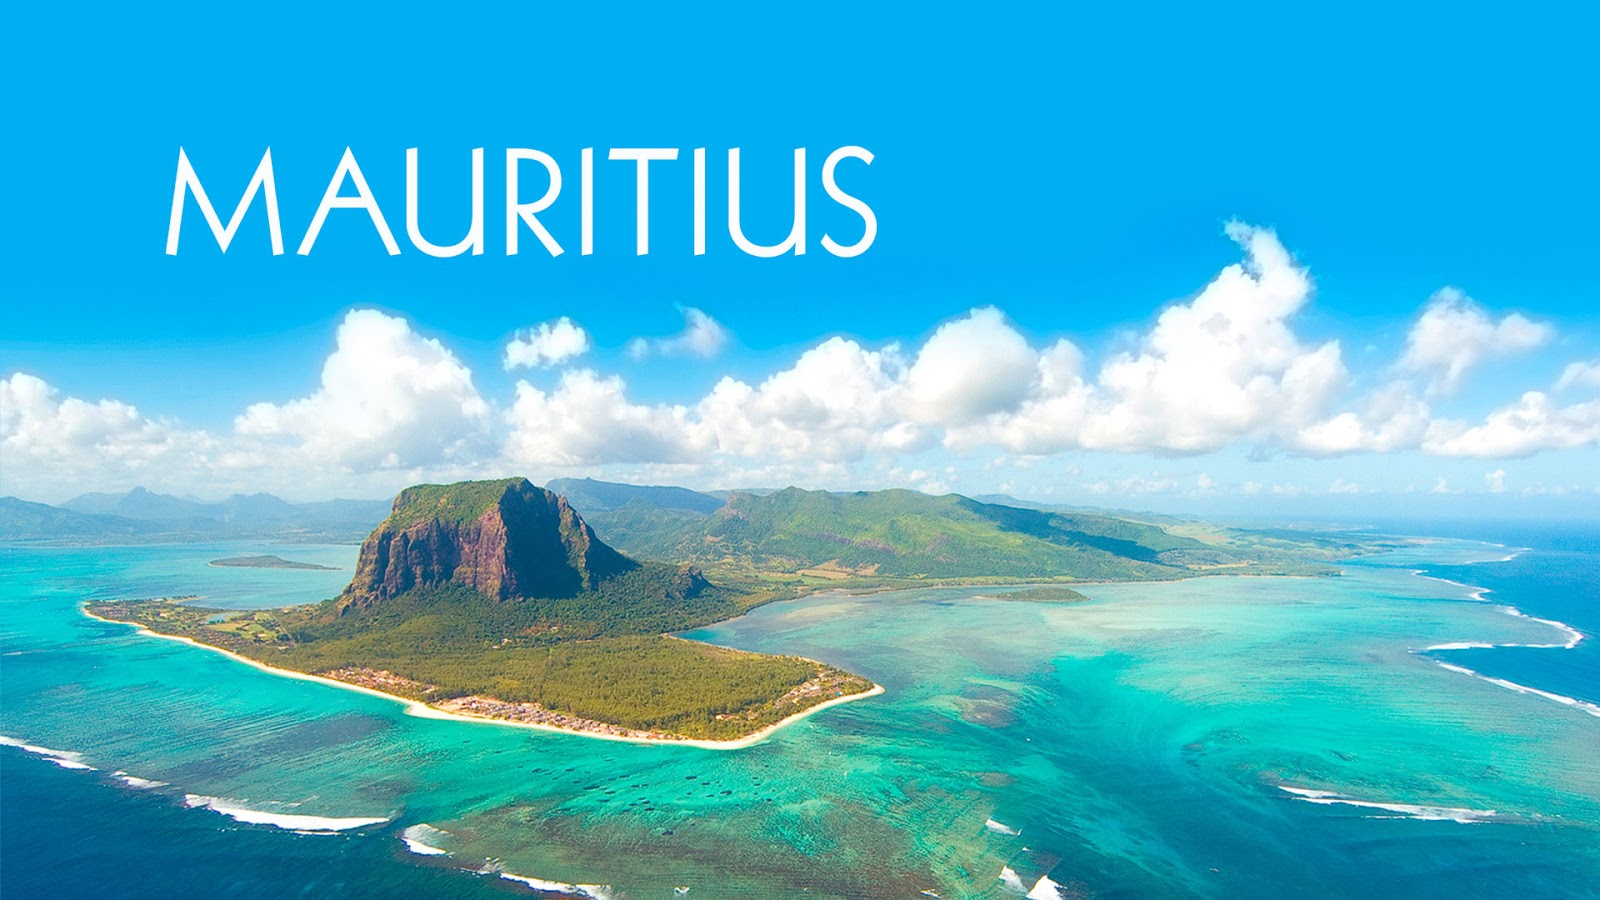 mauritius tour package from mumbai